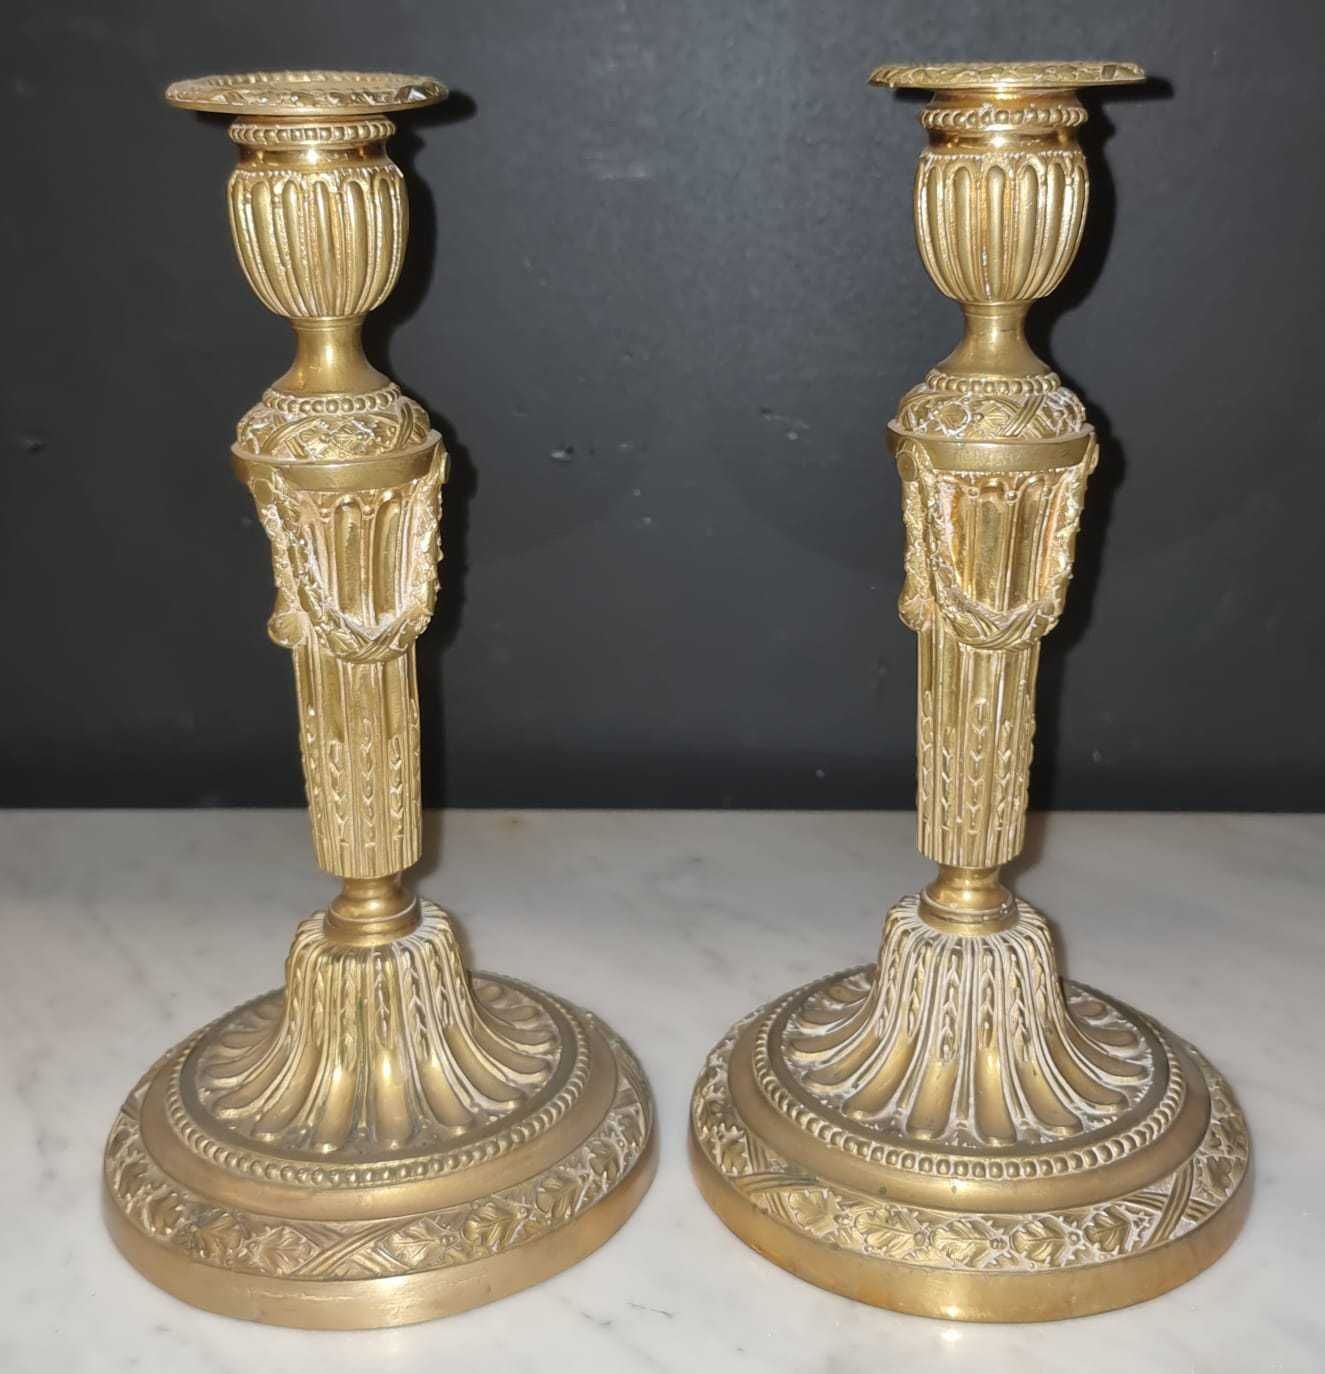 Null 一对带凹槽和鎏金的青铜烛台

路易十六时期

高：27厘米

*按指定方式出售